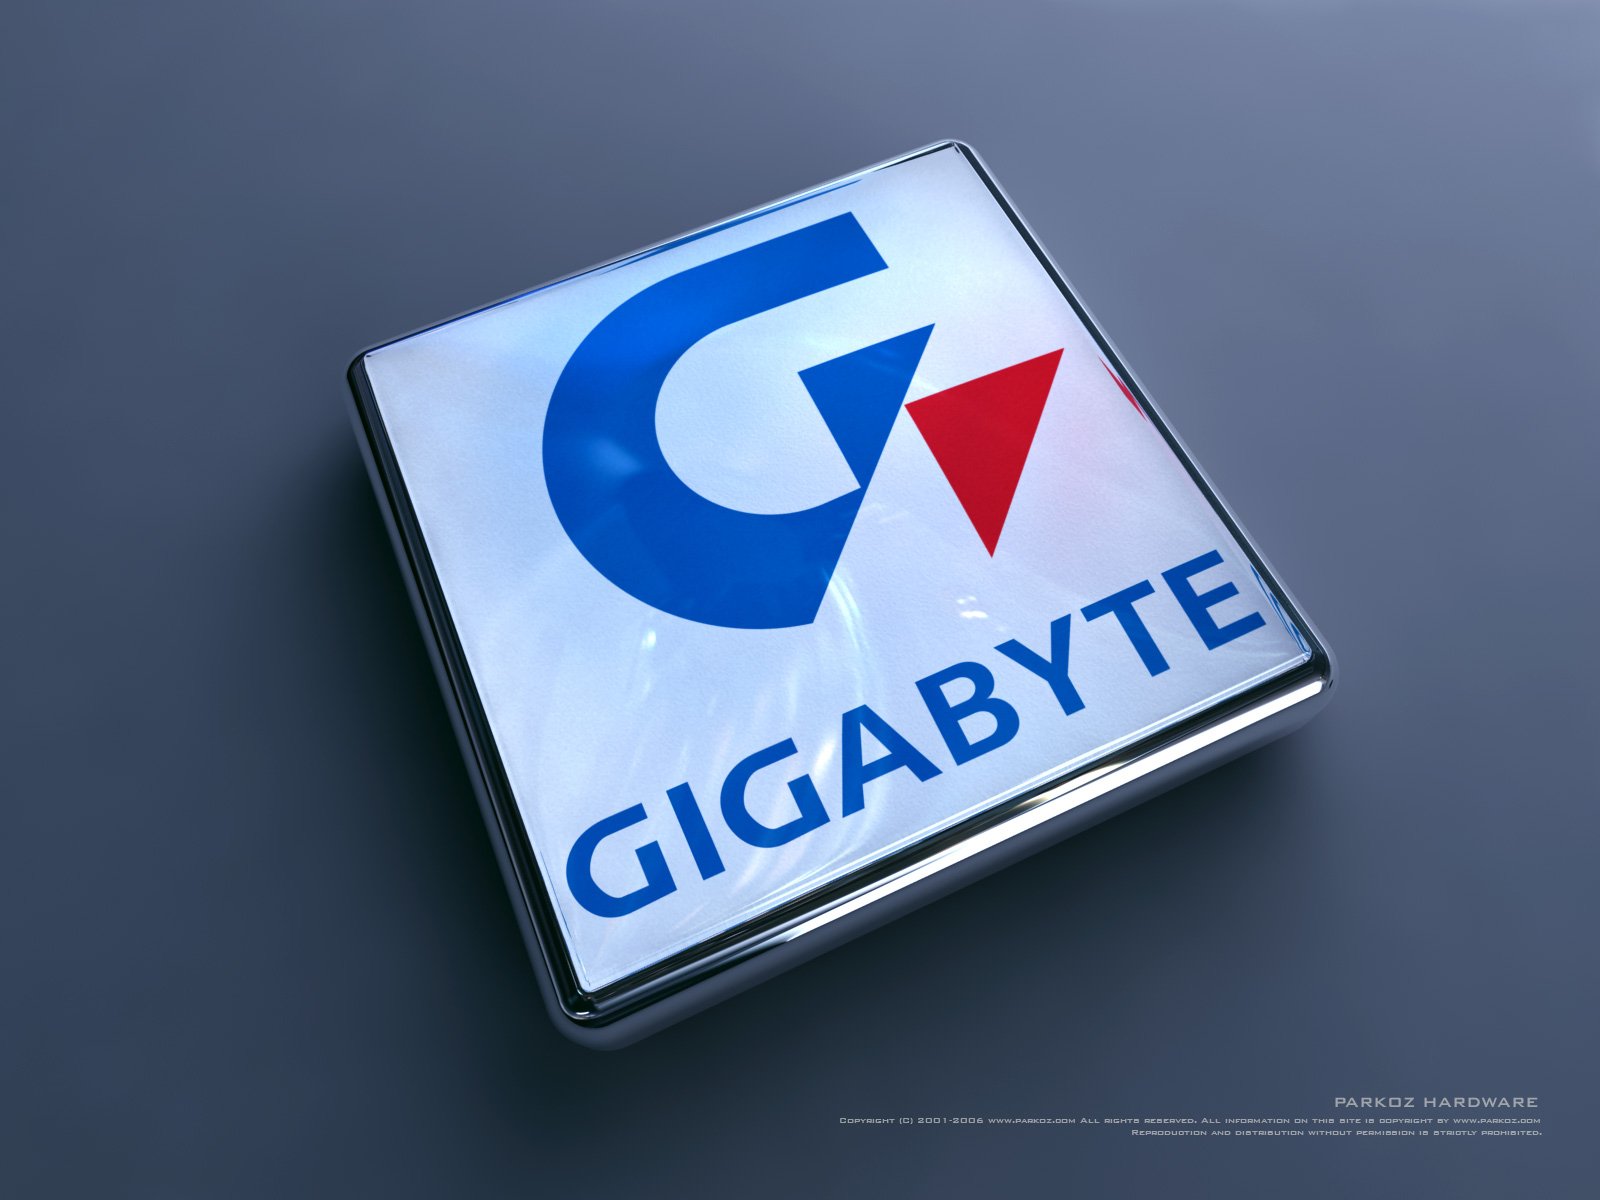 Technology Gigabyte HD Wallpaper | Background Image